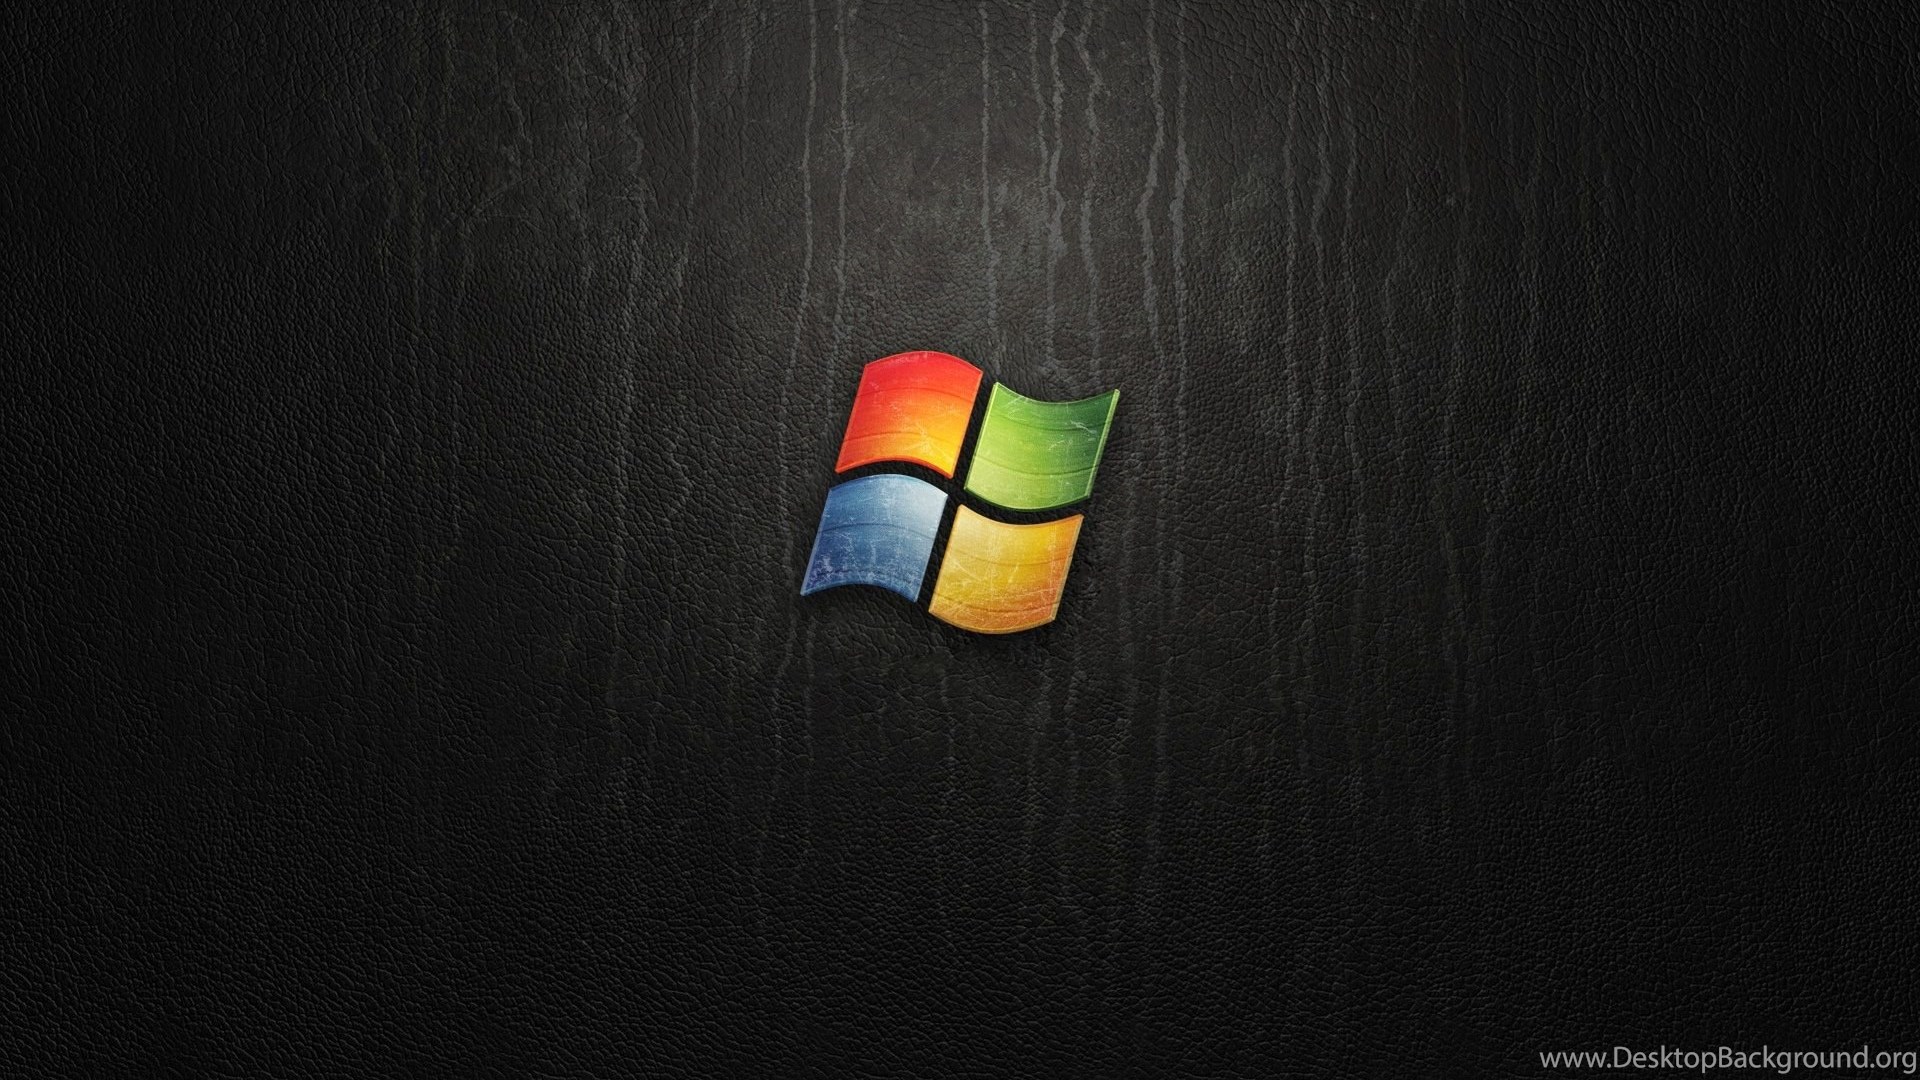 Descargar Fondos De Pantalla Wallpapers Windows 8 Hd Widescreen ... Full Hd Wallpapers For Windows 8 1920x1080